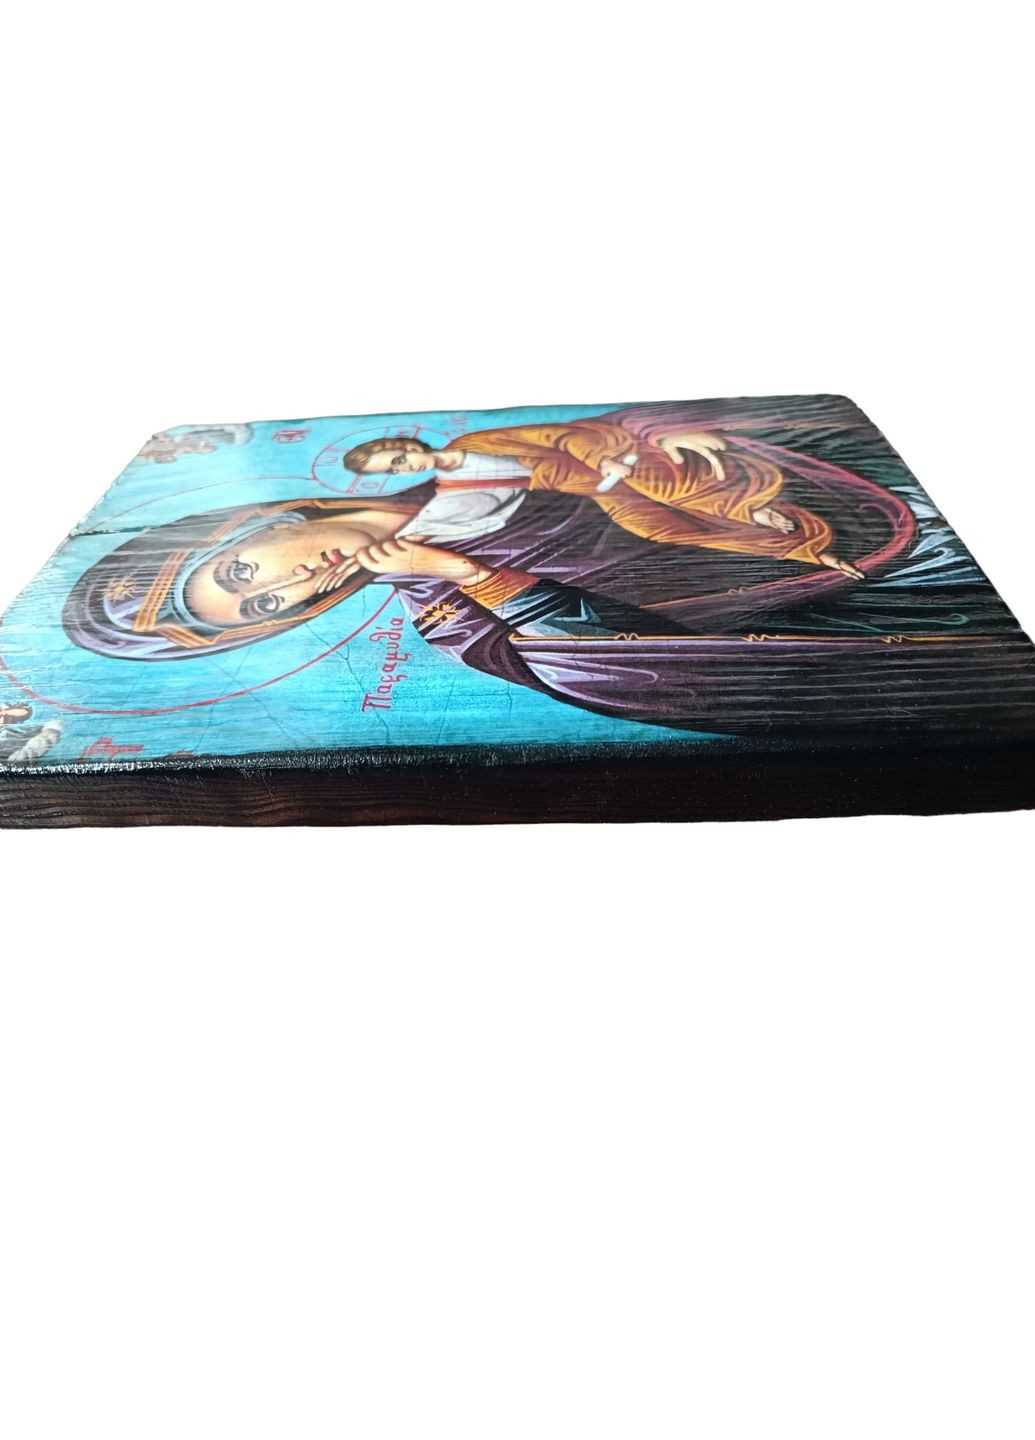 Панно Божа Матір виконана на дереві Handmade ікона (294335100)